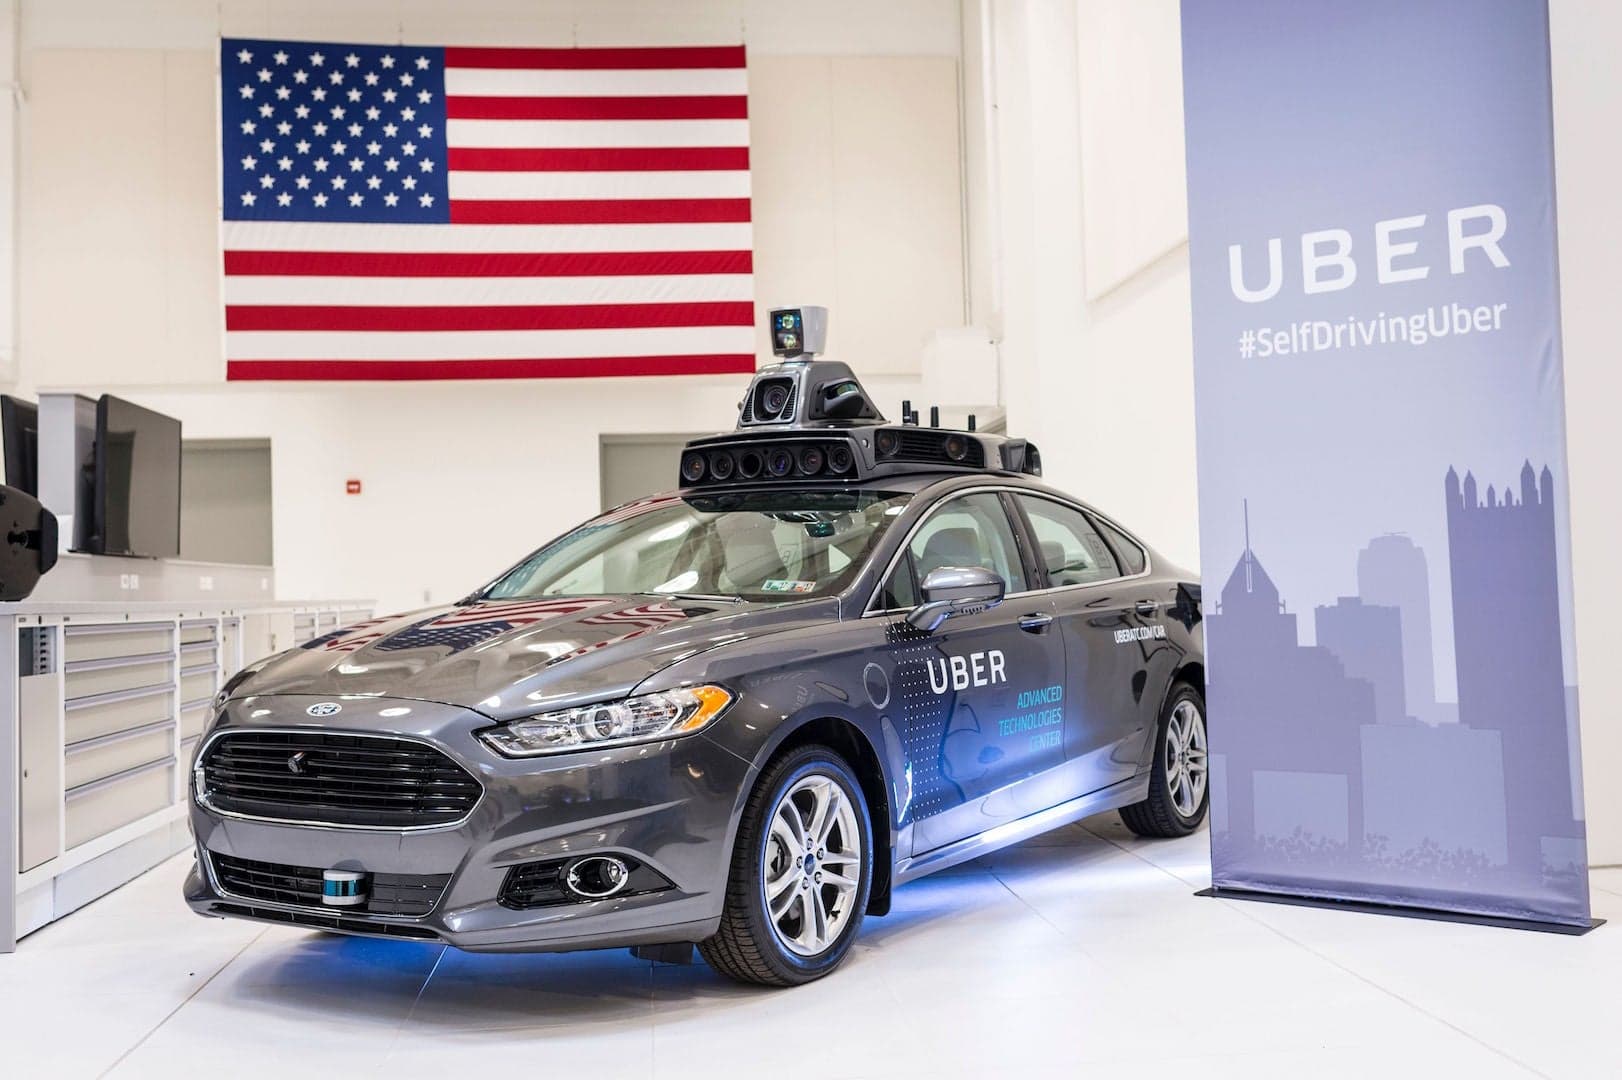 Uber Says It Will Seek Self-Driving Car Permits in California